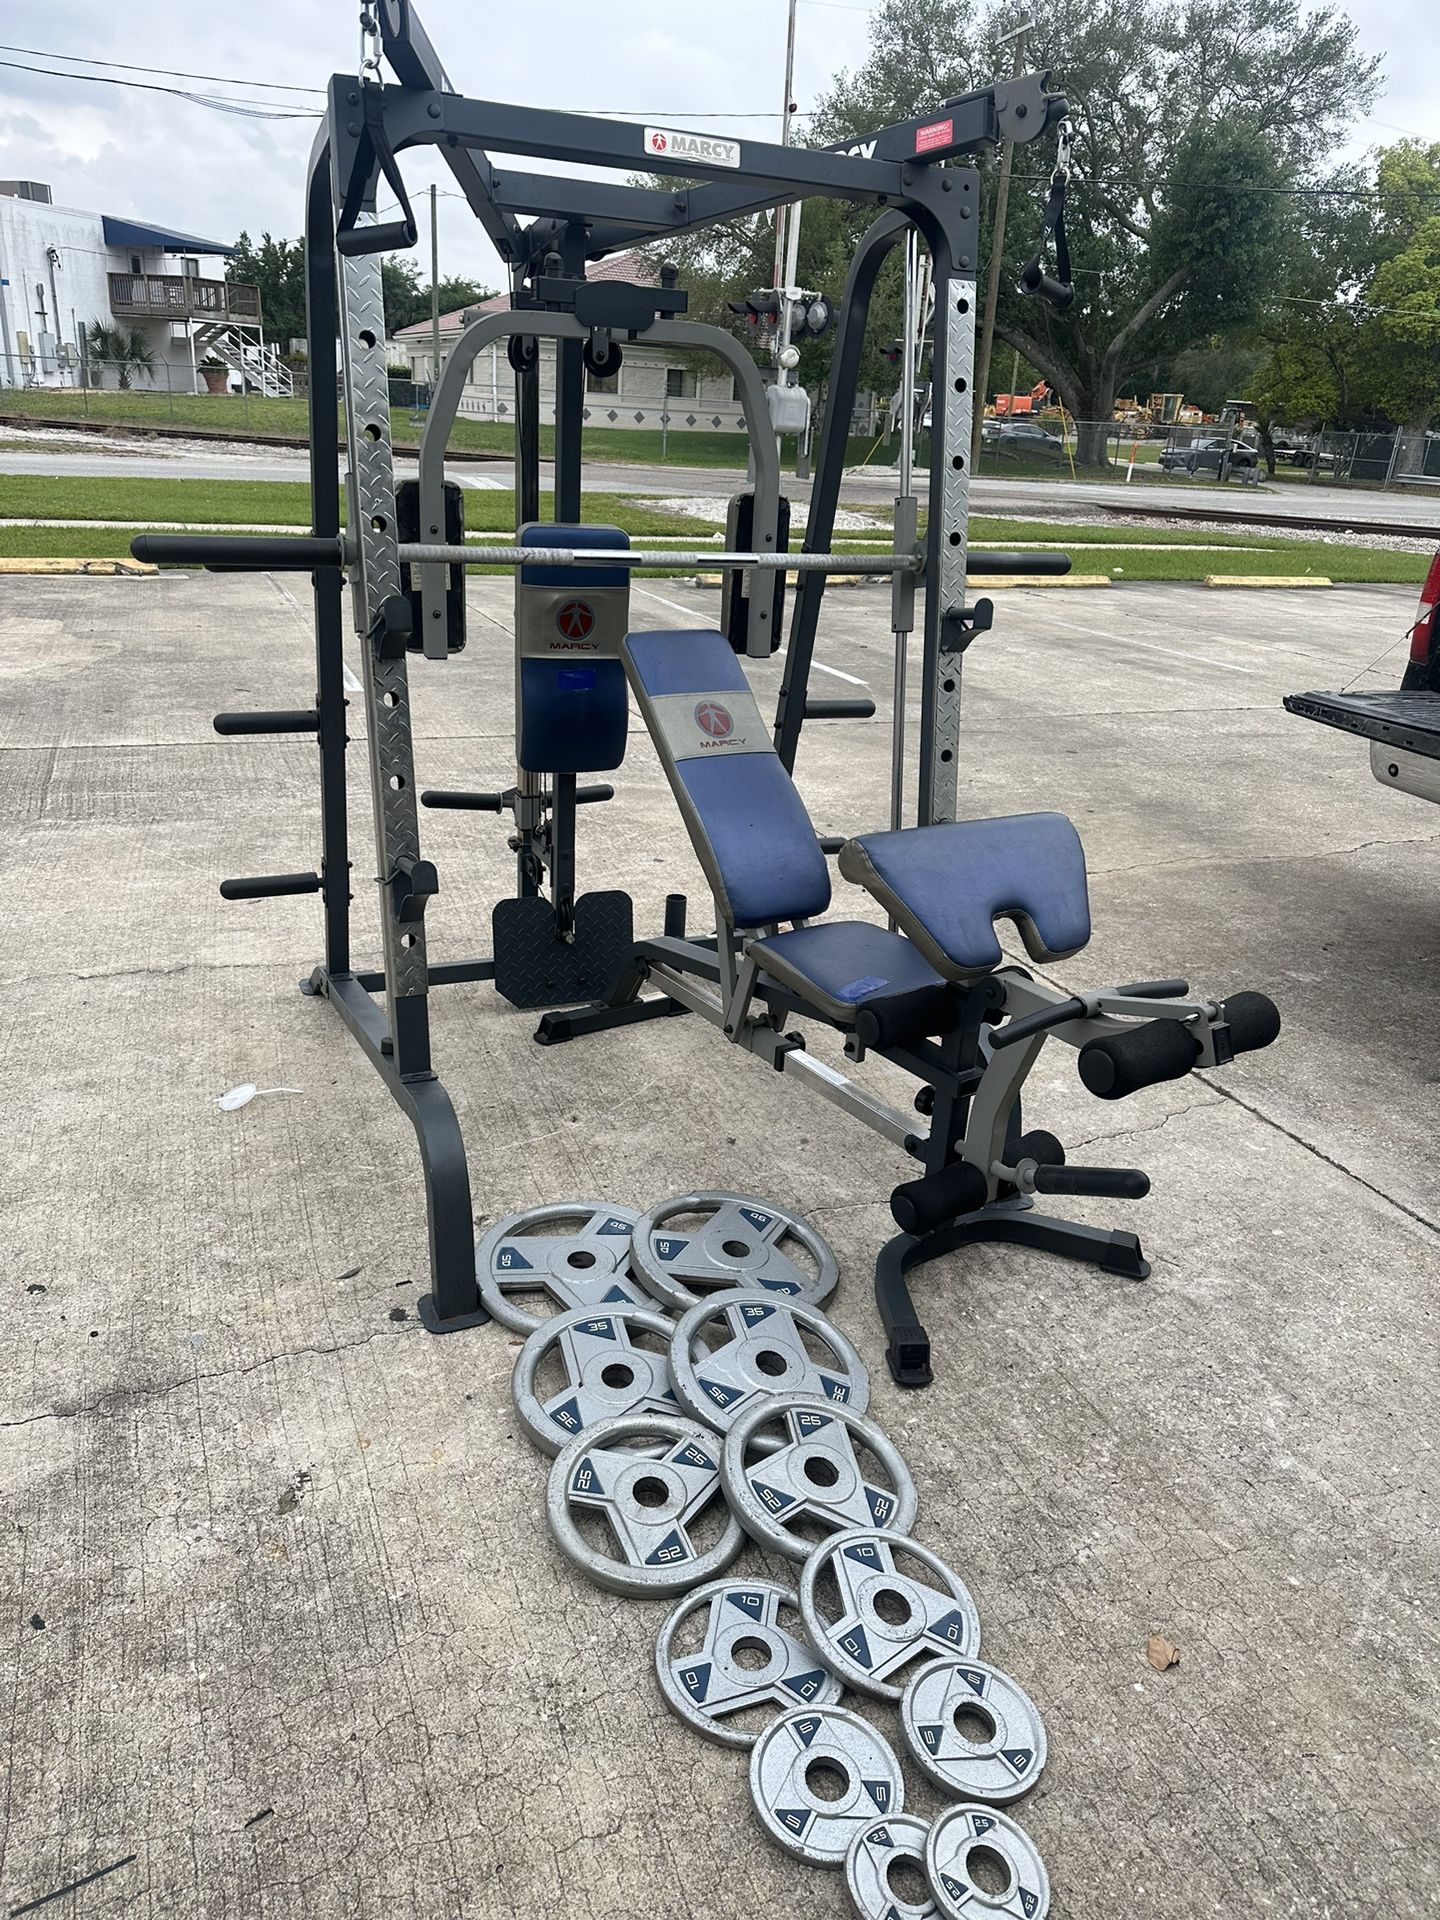 Smith Machine Home Gym Set